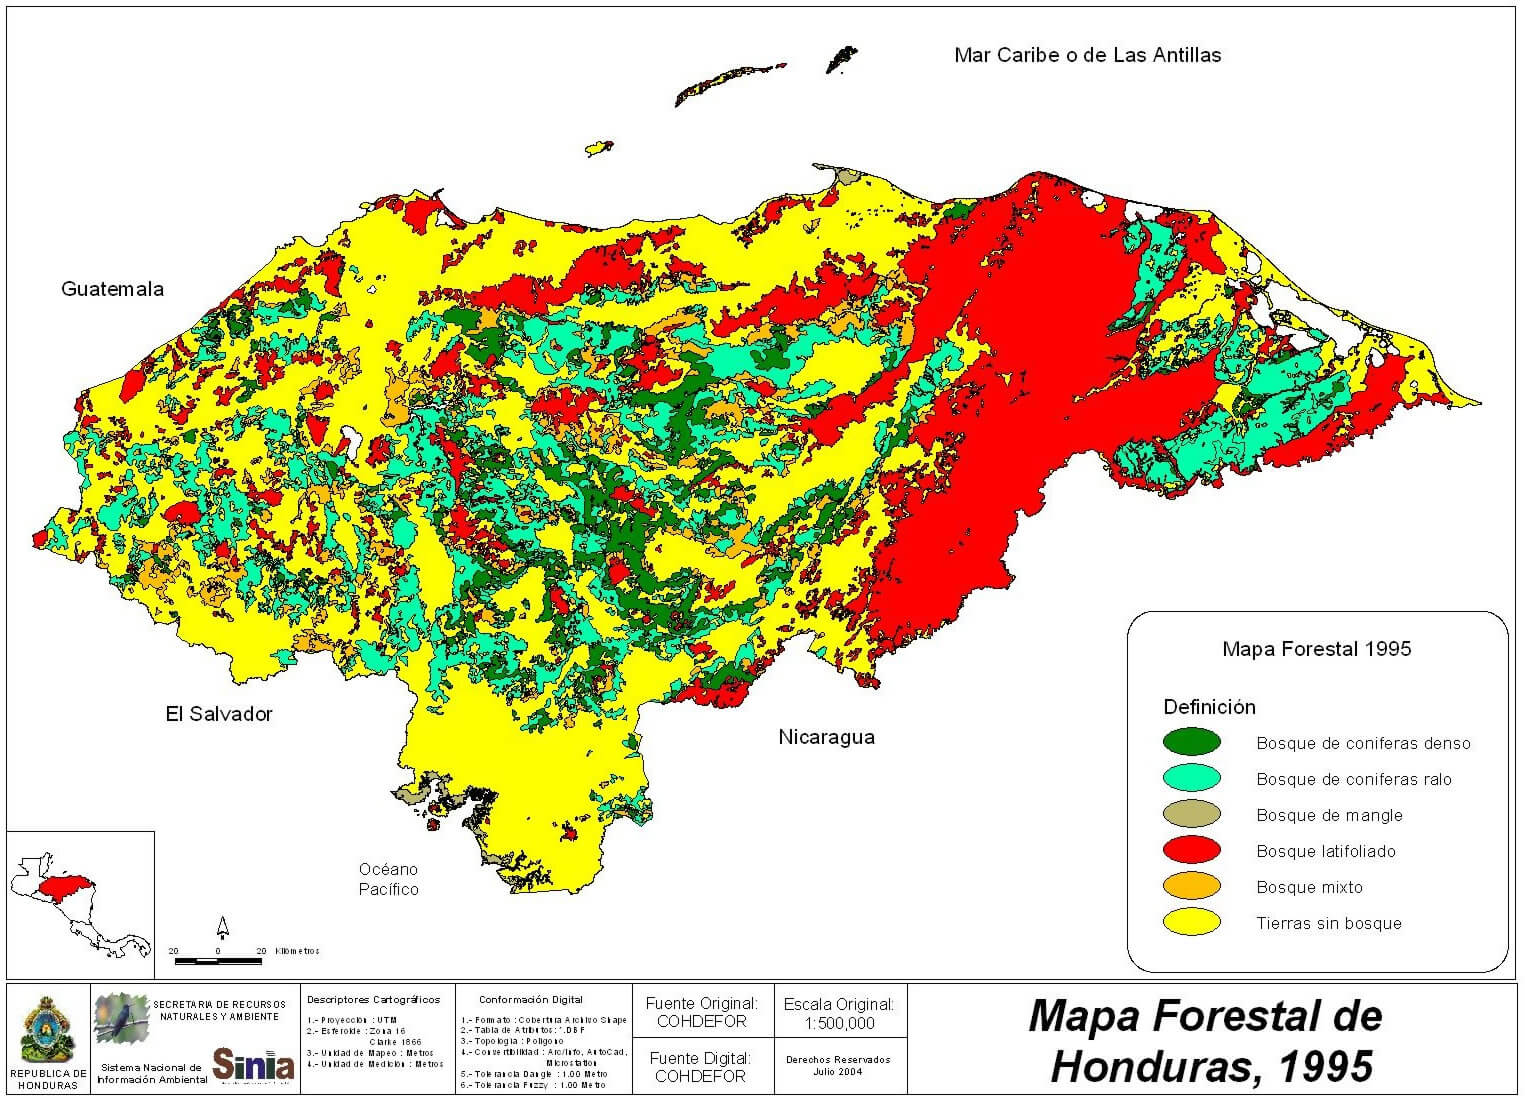 Honduras Forestry Map 1995